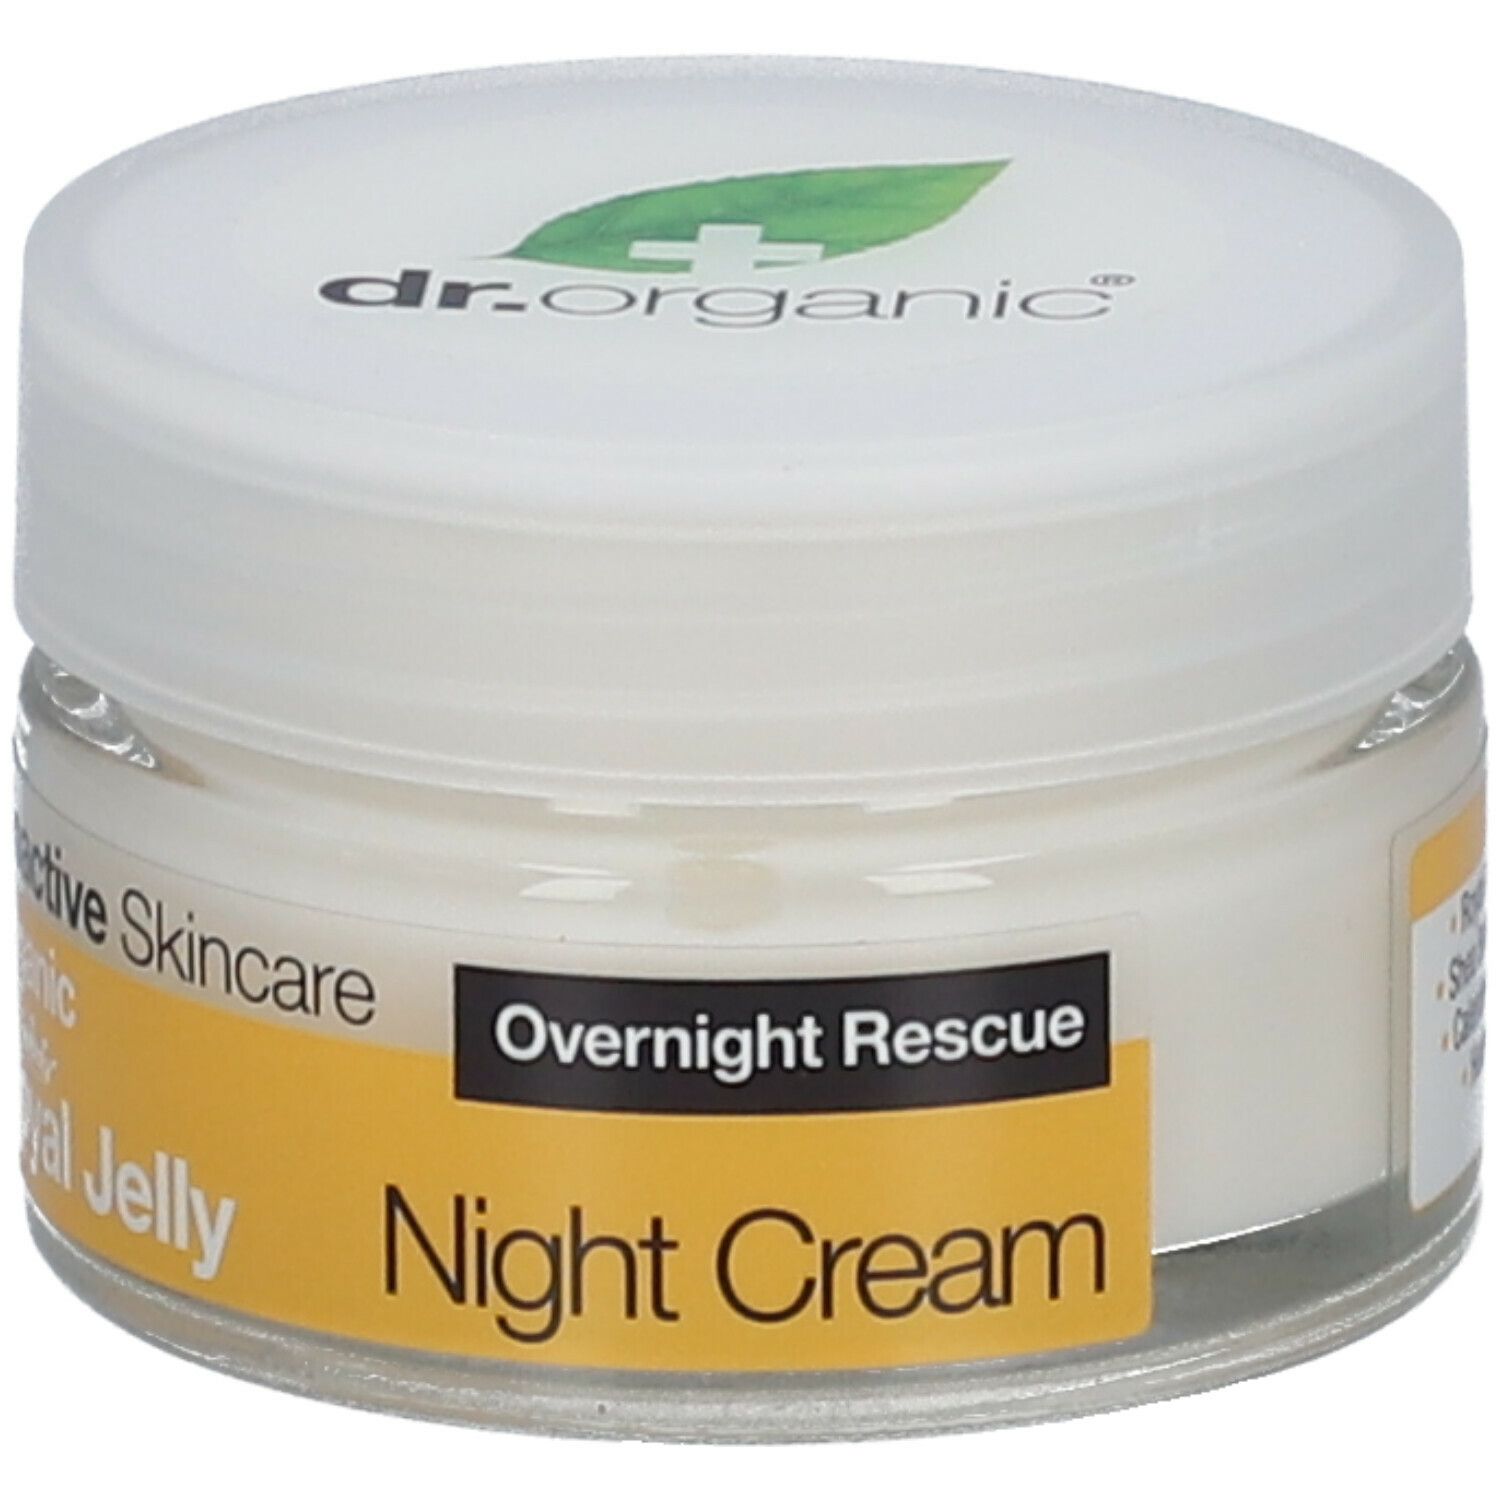 Image of Dr. Organic® Royal Jelly Night Cream